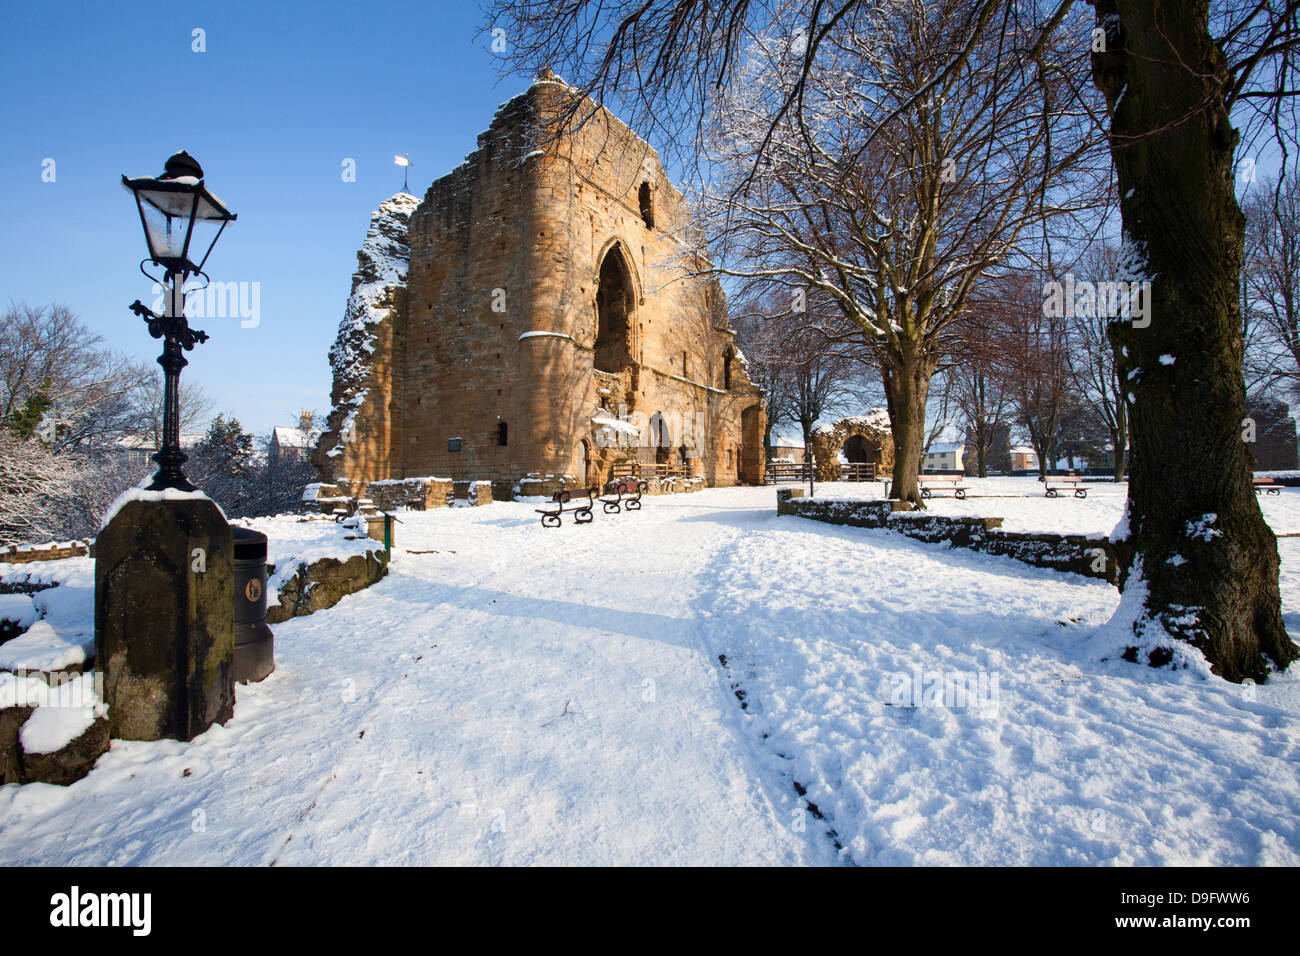 The Kings Tower at Knaresborough Castle in the snow Knaresborough, Yorkshire, England, UK Stock Photo